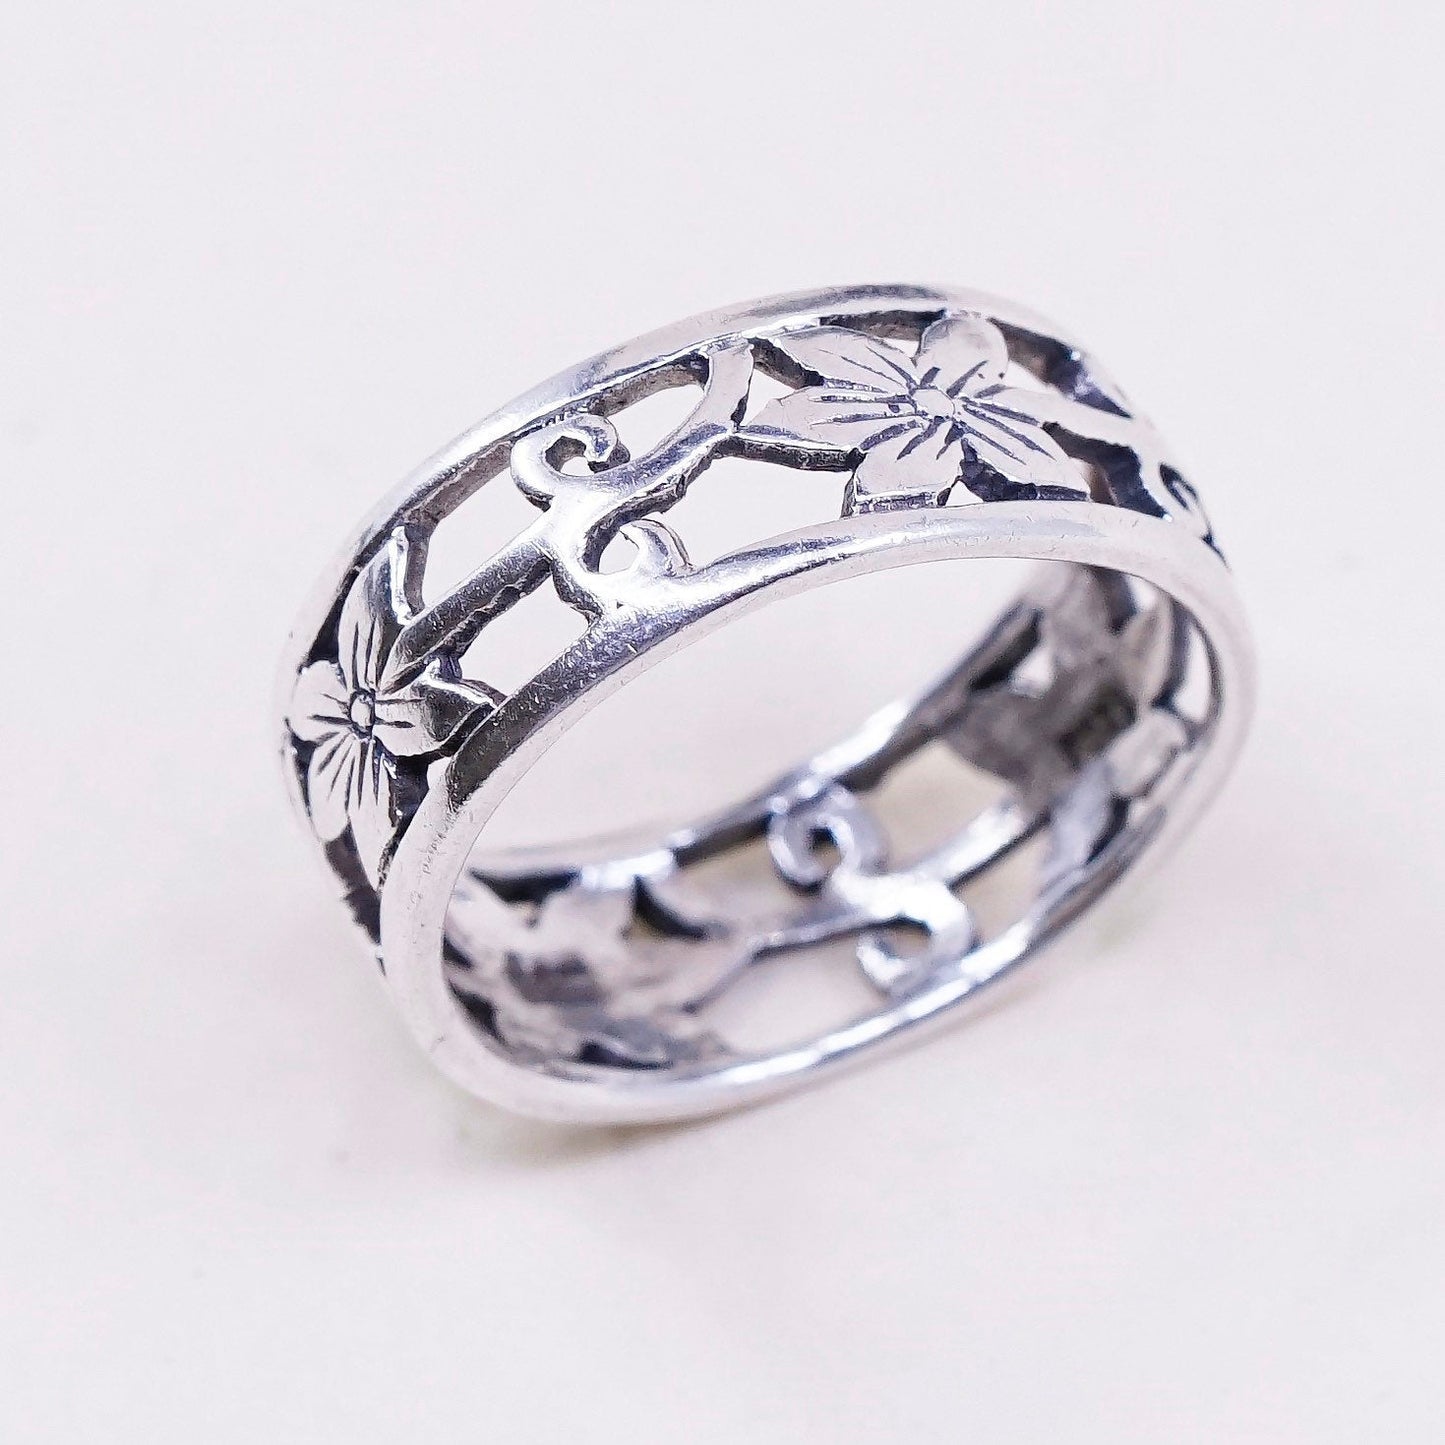 sz 4.75, vtg sterling silver handmade ring, 925 band w/ floral filigree